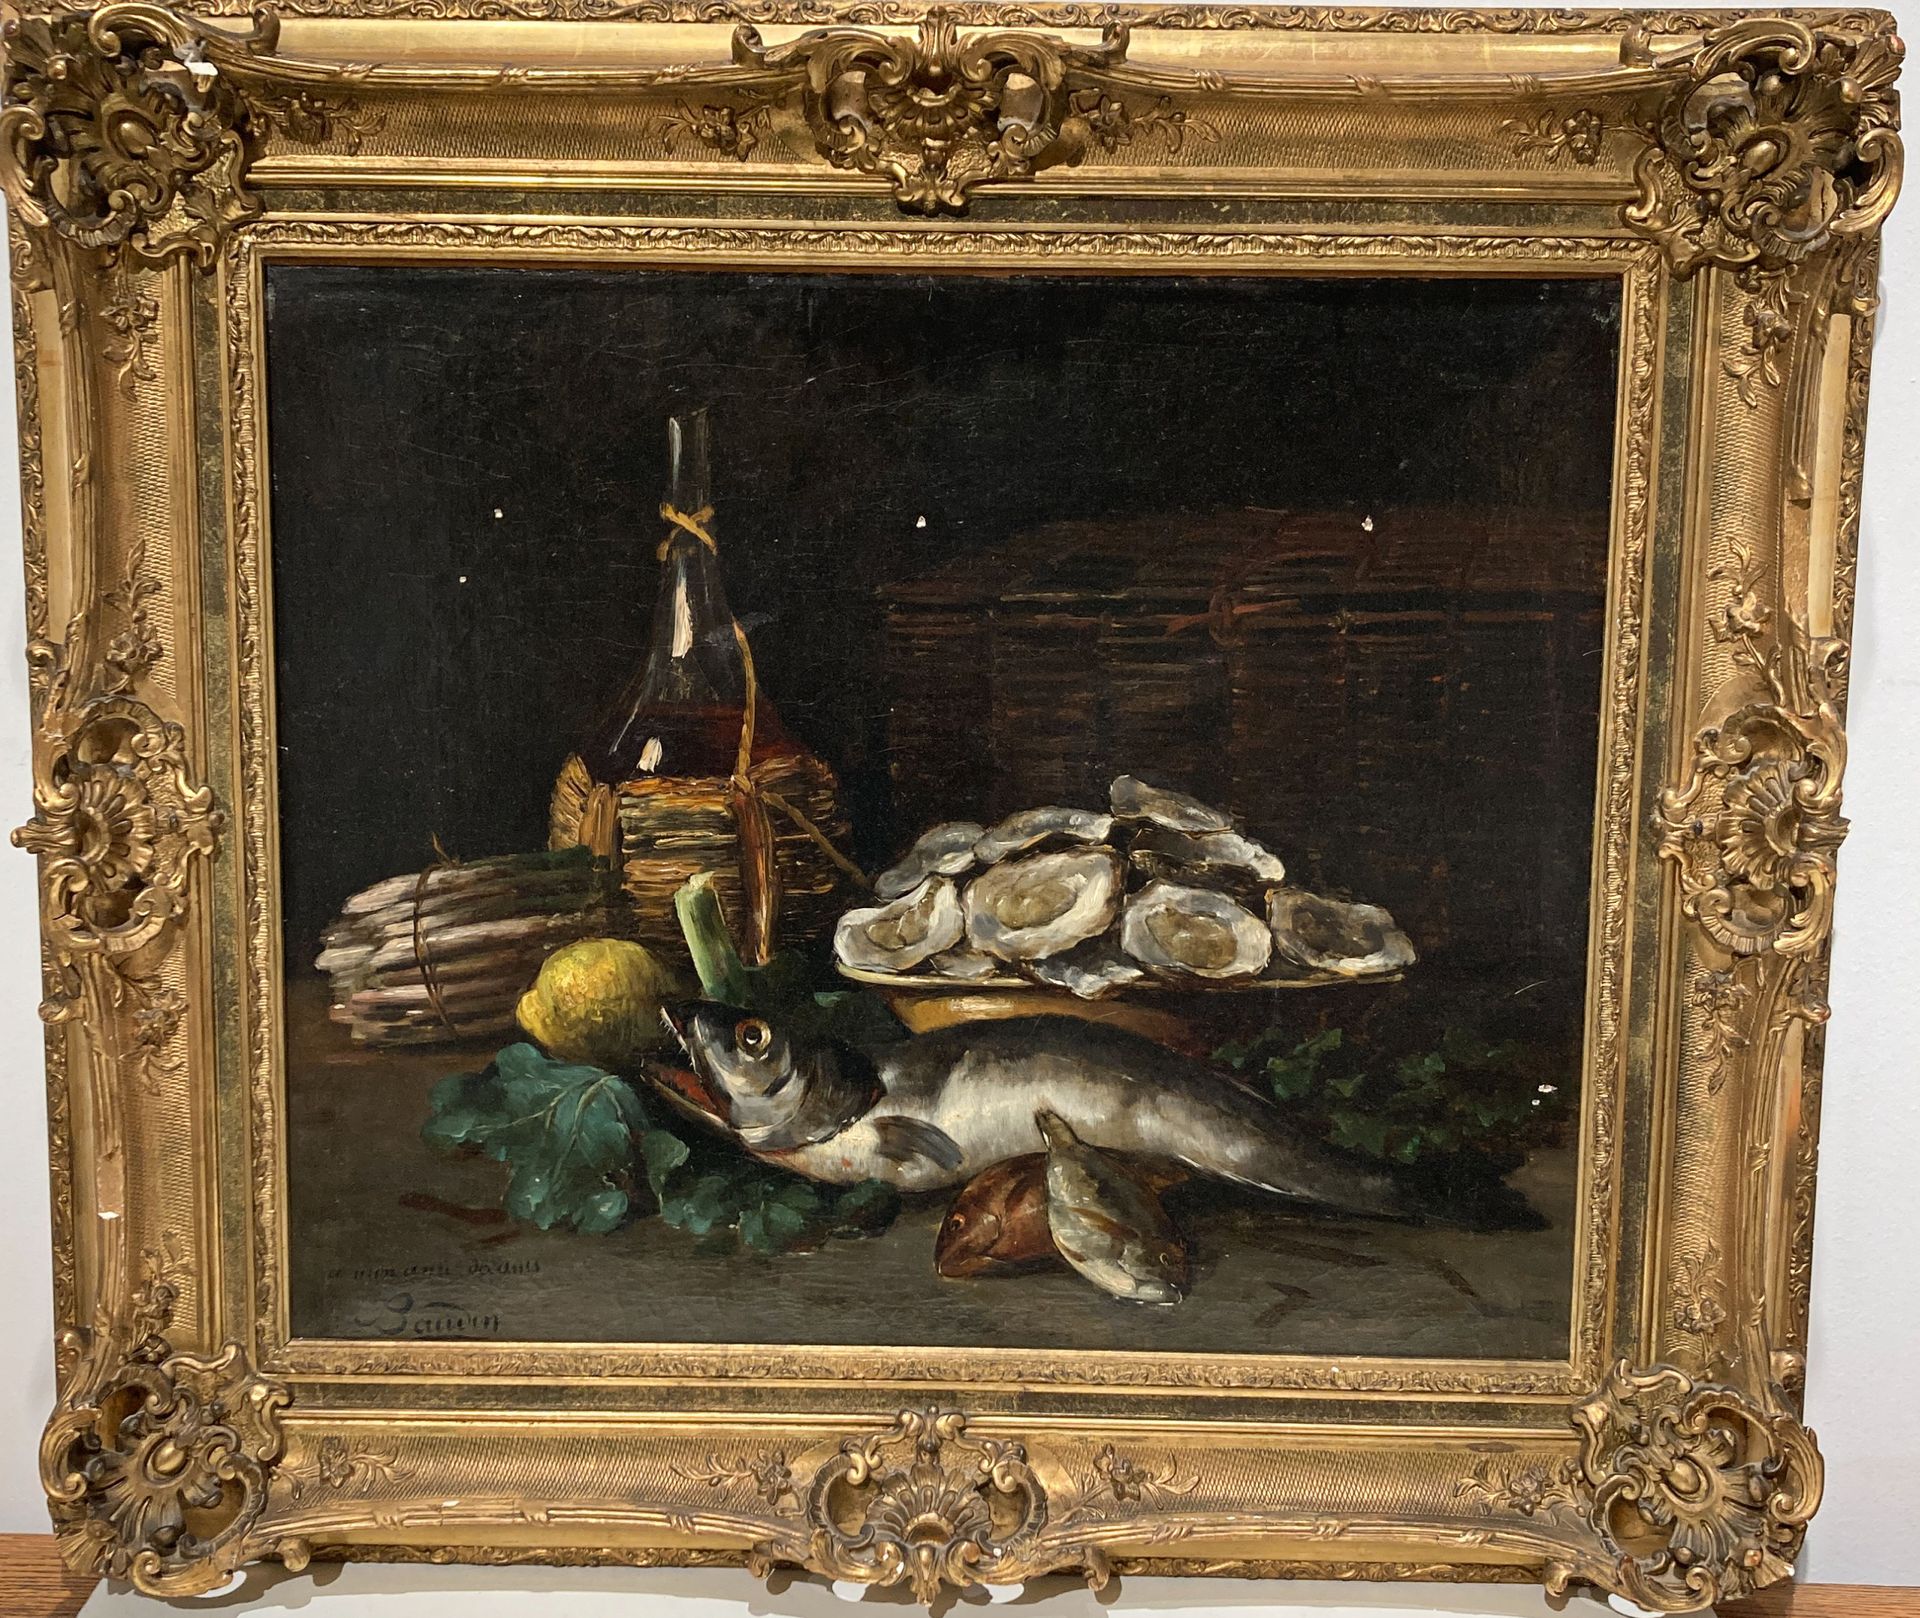 Null 让-巴蒂斯特-鲍丁 (1851-1922)

从捕鱼返回

布面油画

左下角署名并献给迪卡尼斯

55 x 66 厘米